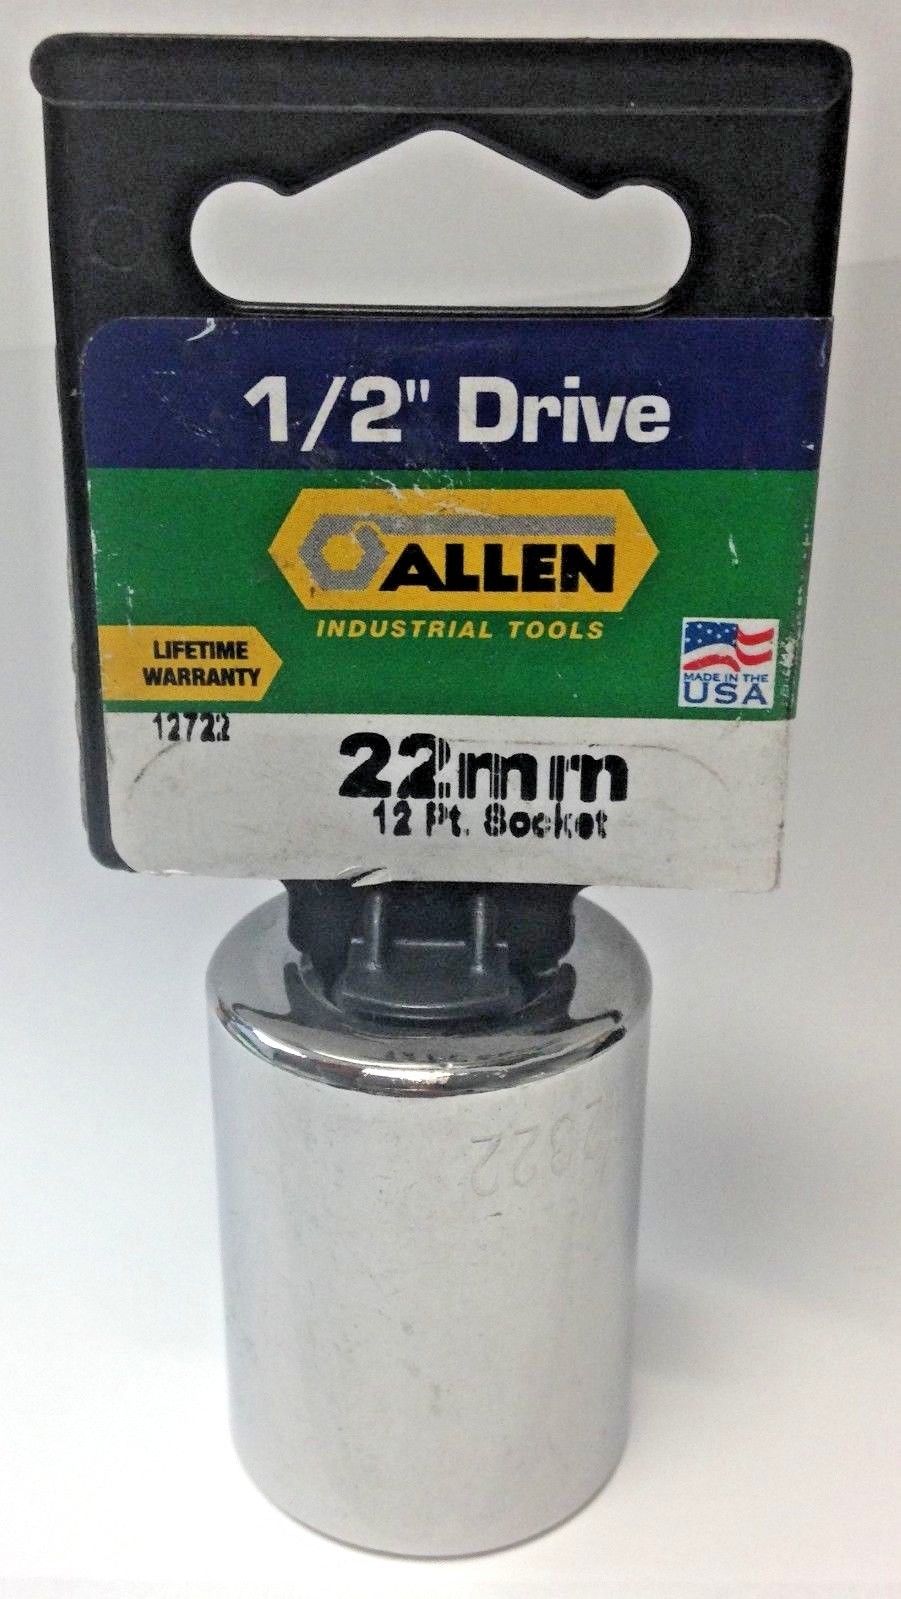 Allen 12322 12722 1/2" Drive 22mm 12 Point Socket USA